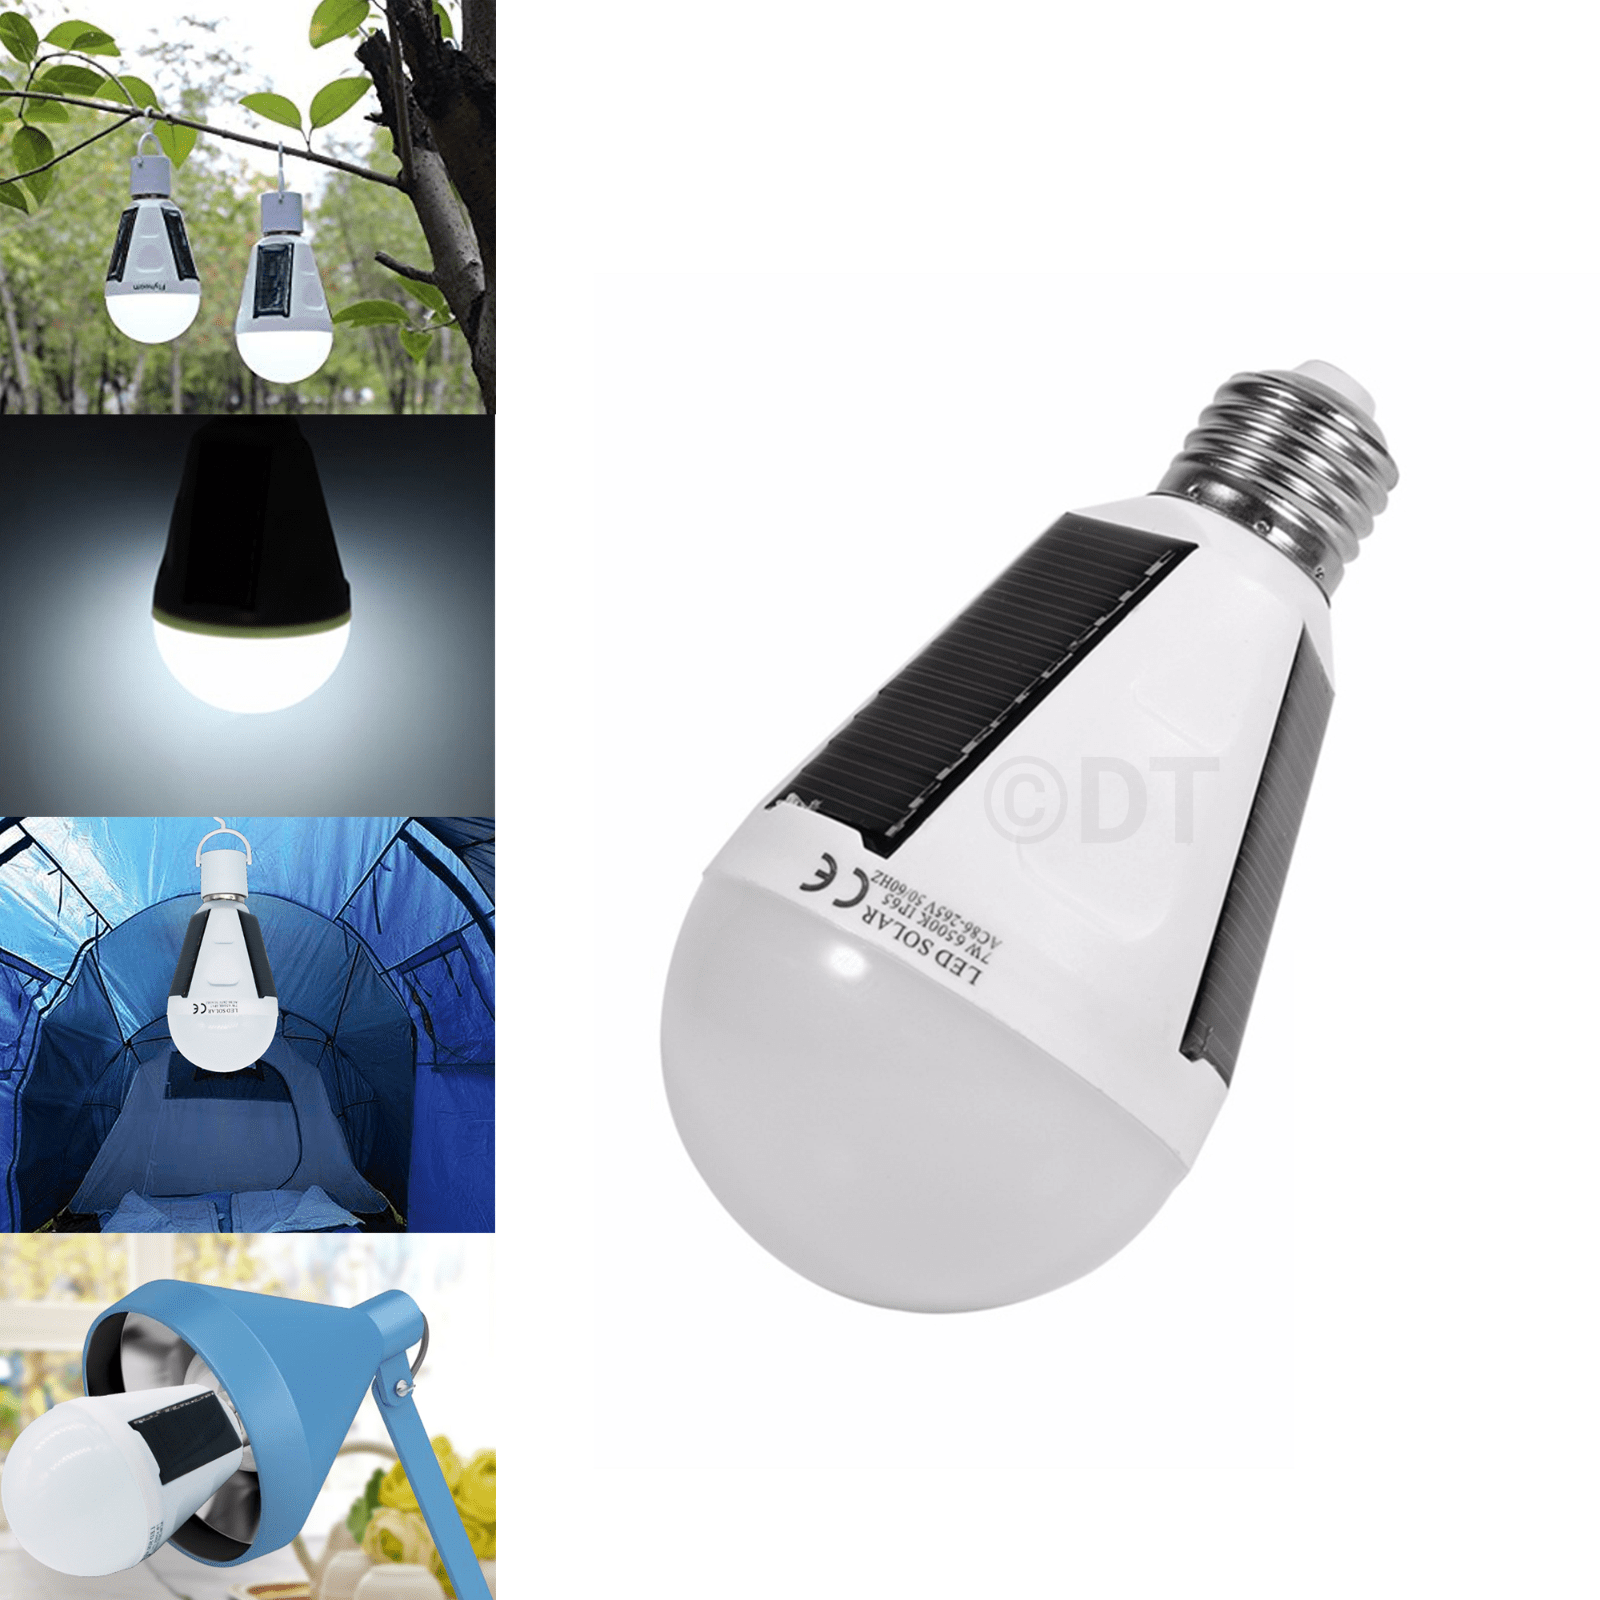 Portable LED Bulb Light Solar Powered Outdoor Garden Lights E27 7W Hanging Bulbs